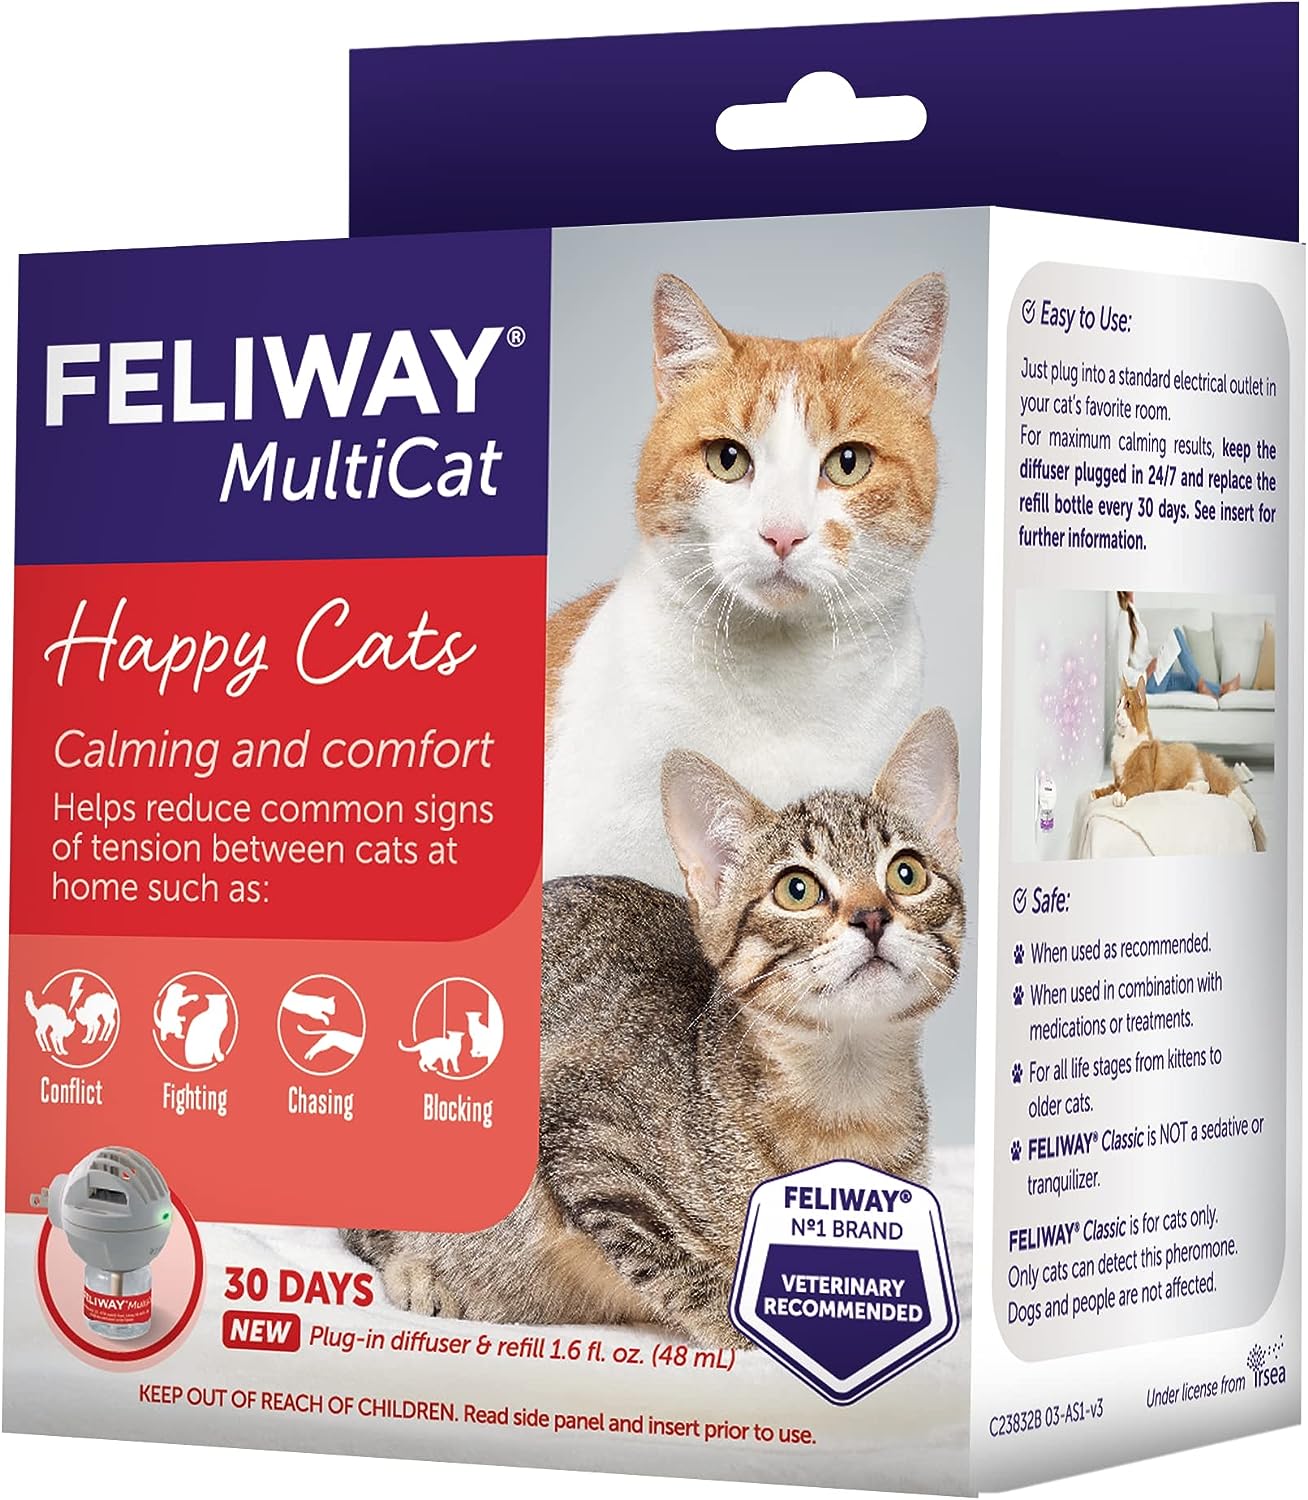 CEVA Animal Health D89410B Feliway multicat Kit de iniciación, 1.6fl oz